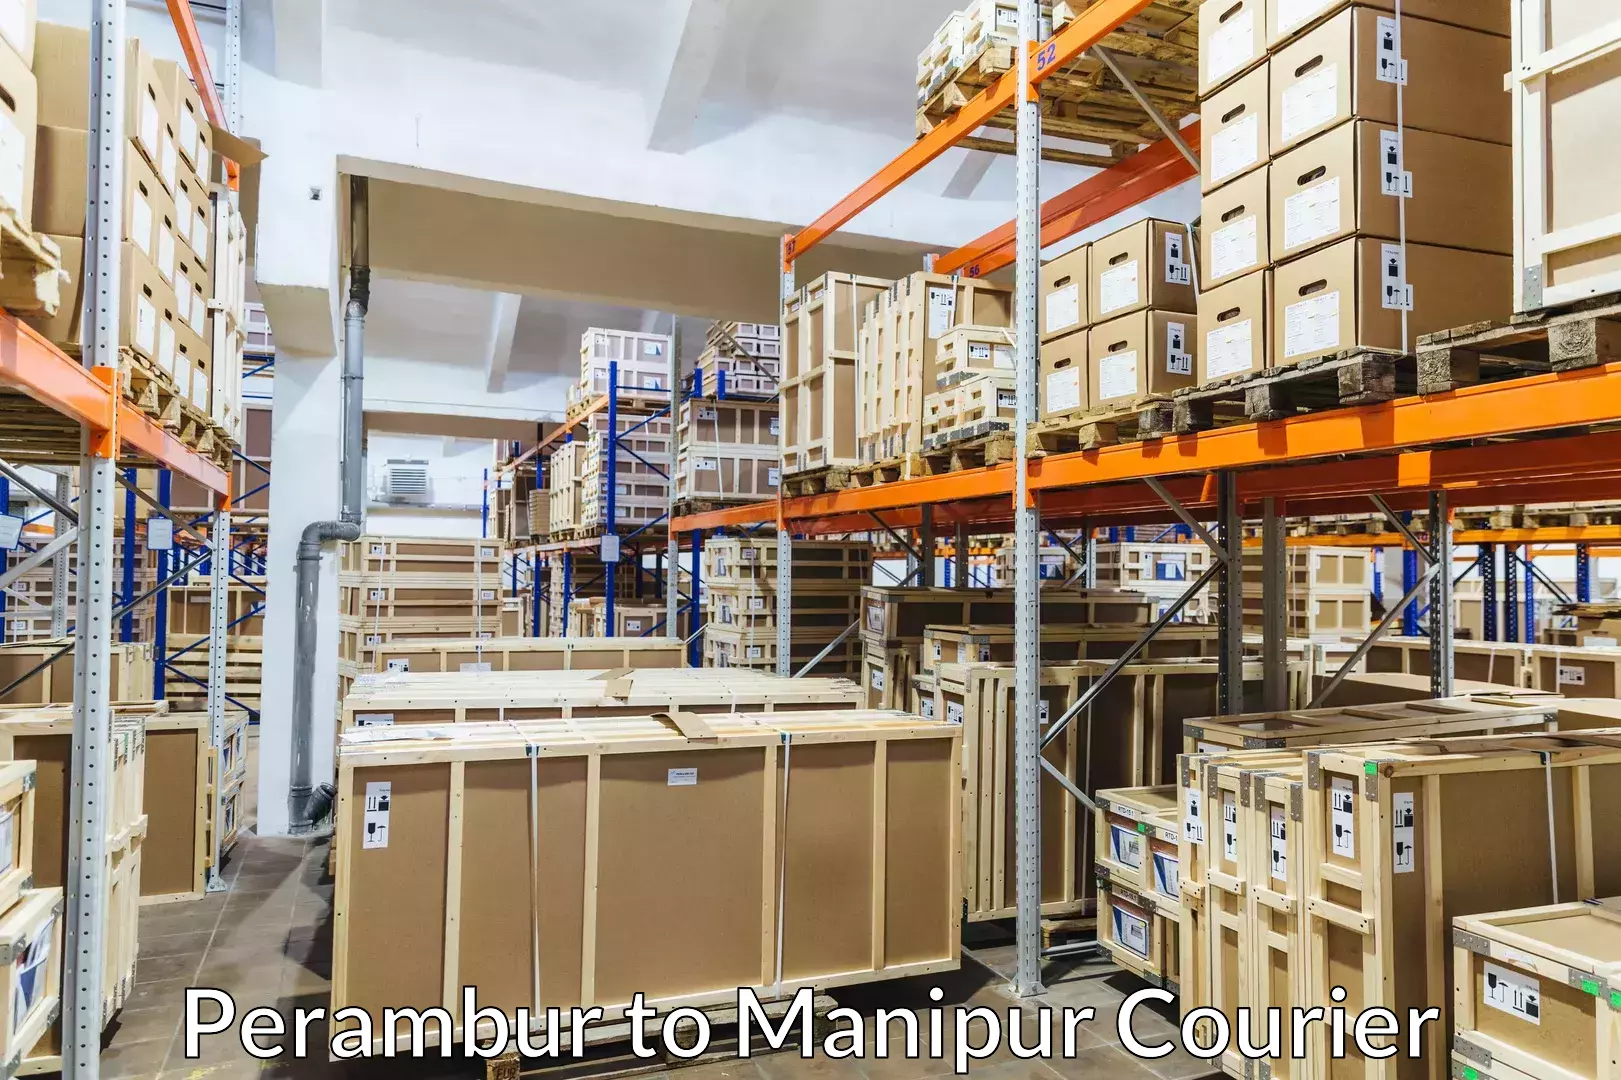 Luggage delivery app Perambur to Manipur